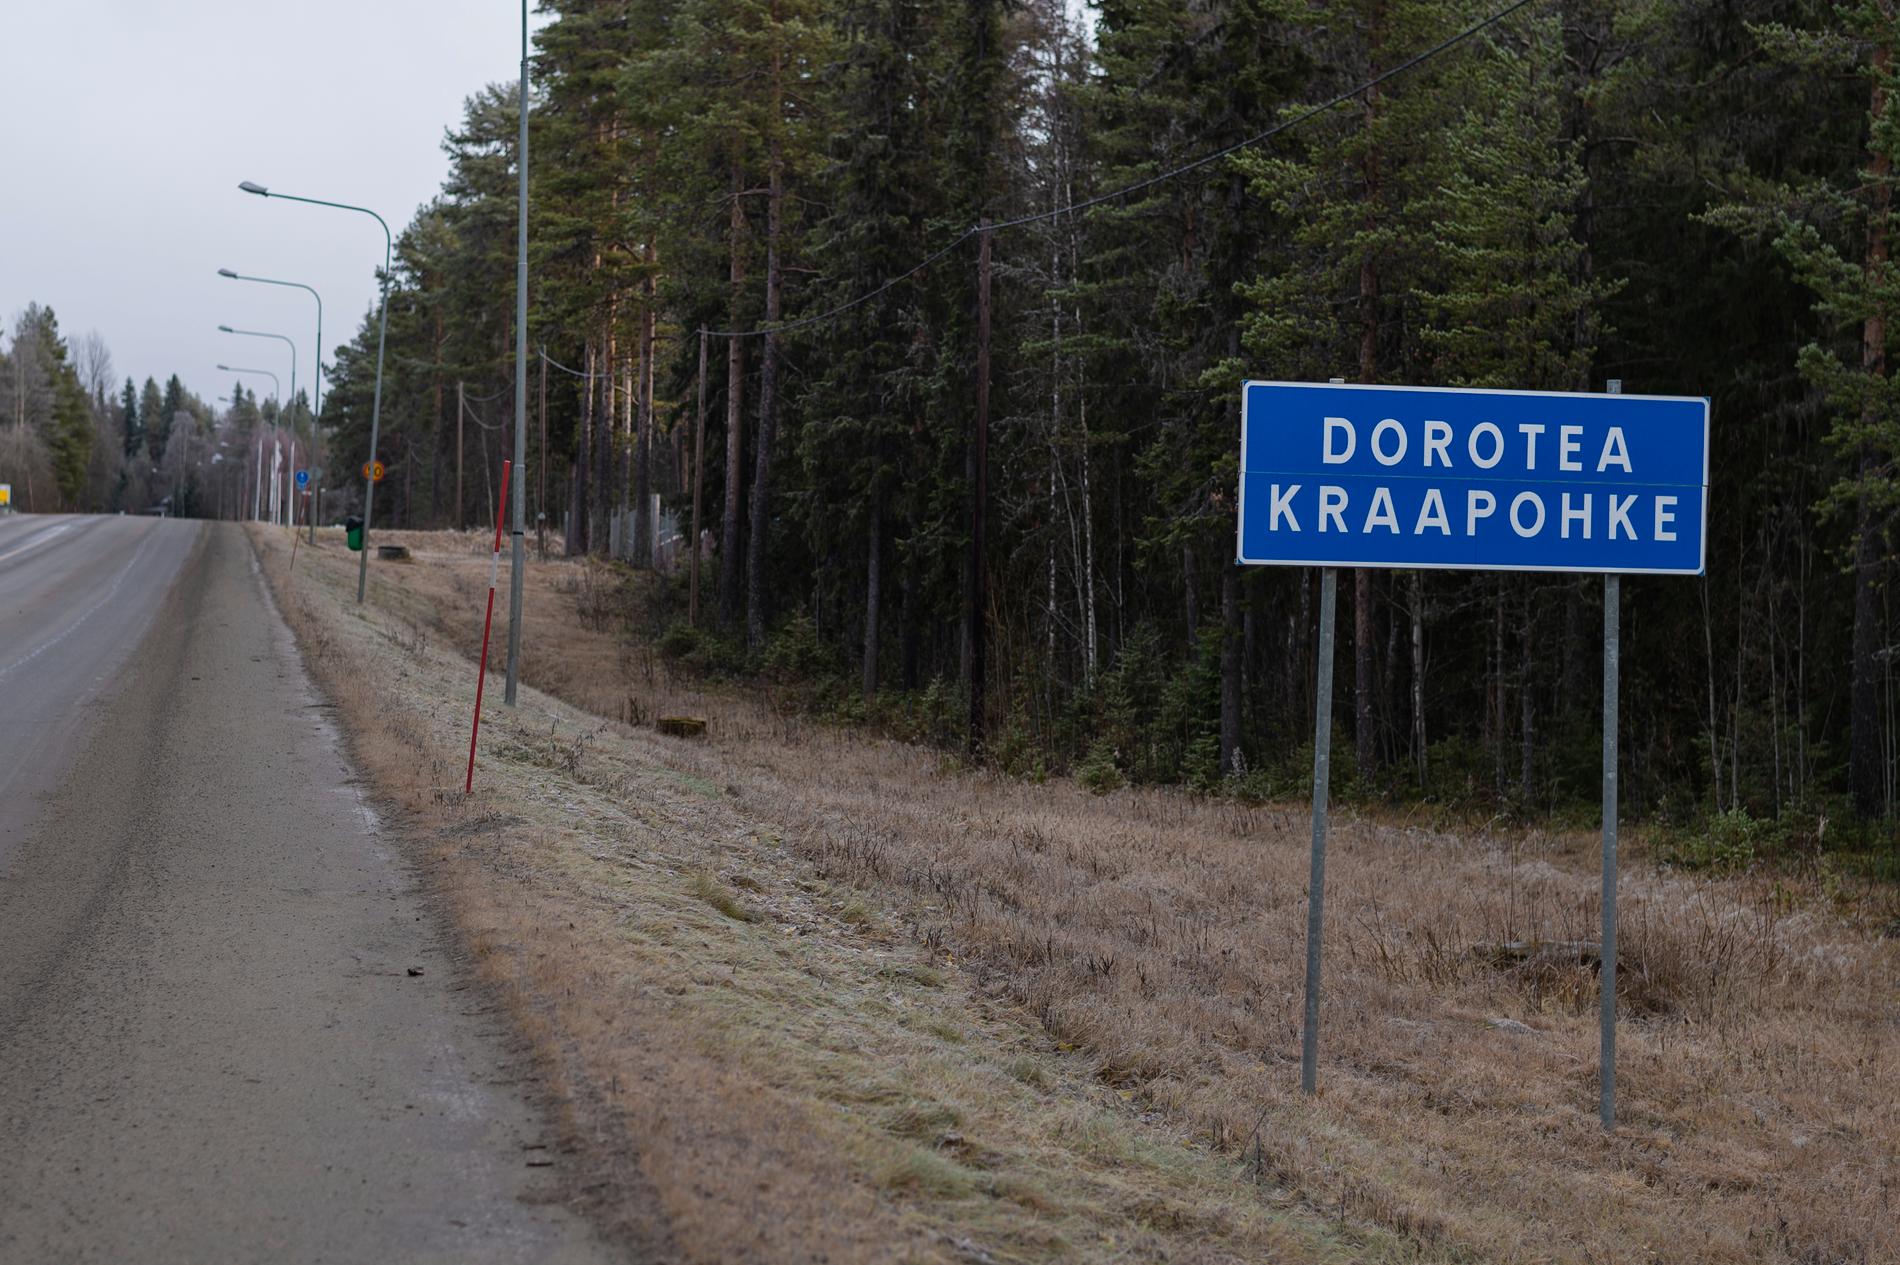 Dorotea kommun har minst antal nya coronafall just nu. 